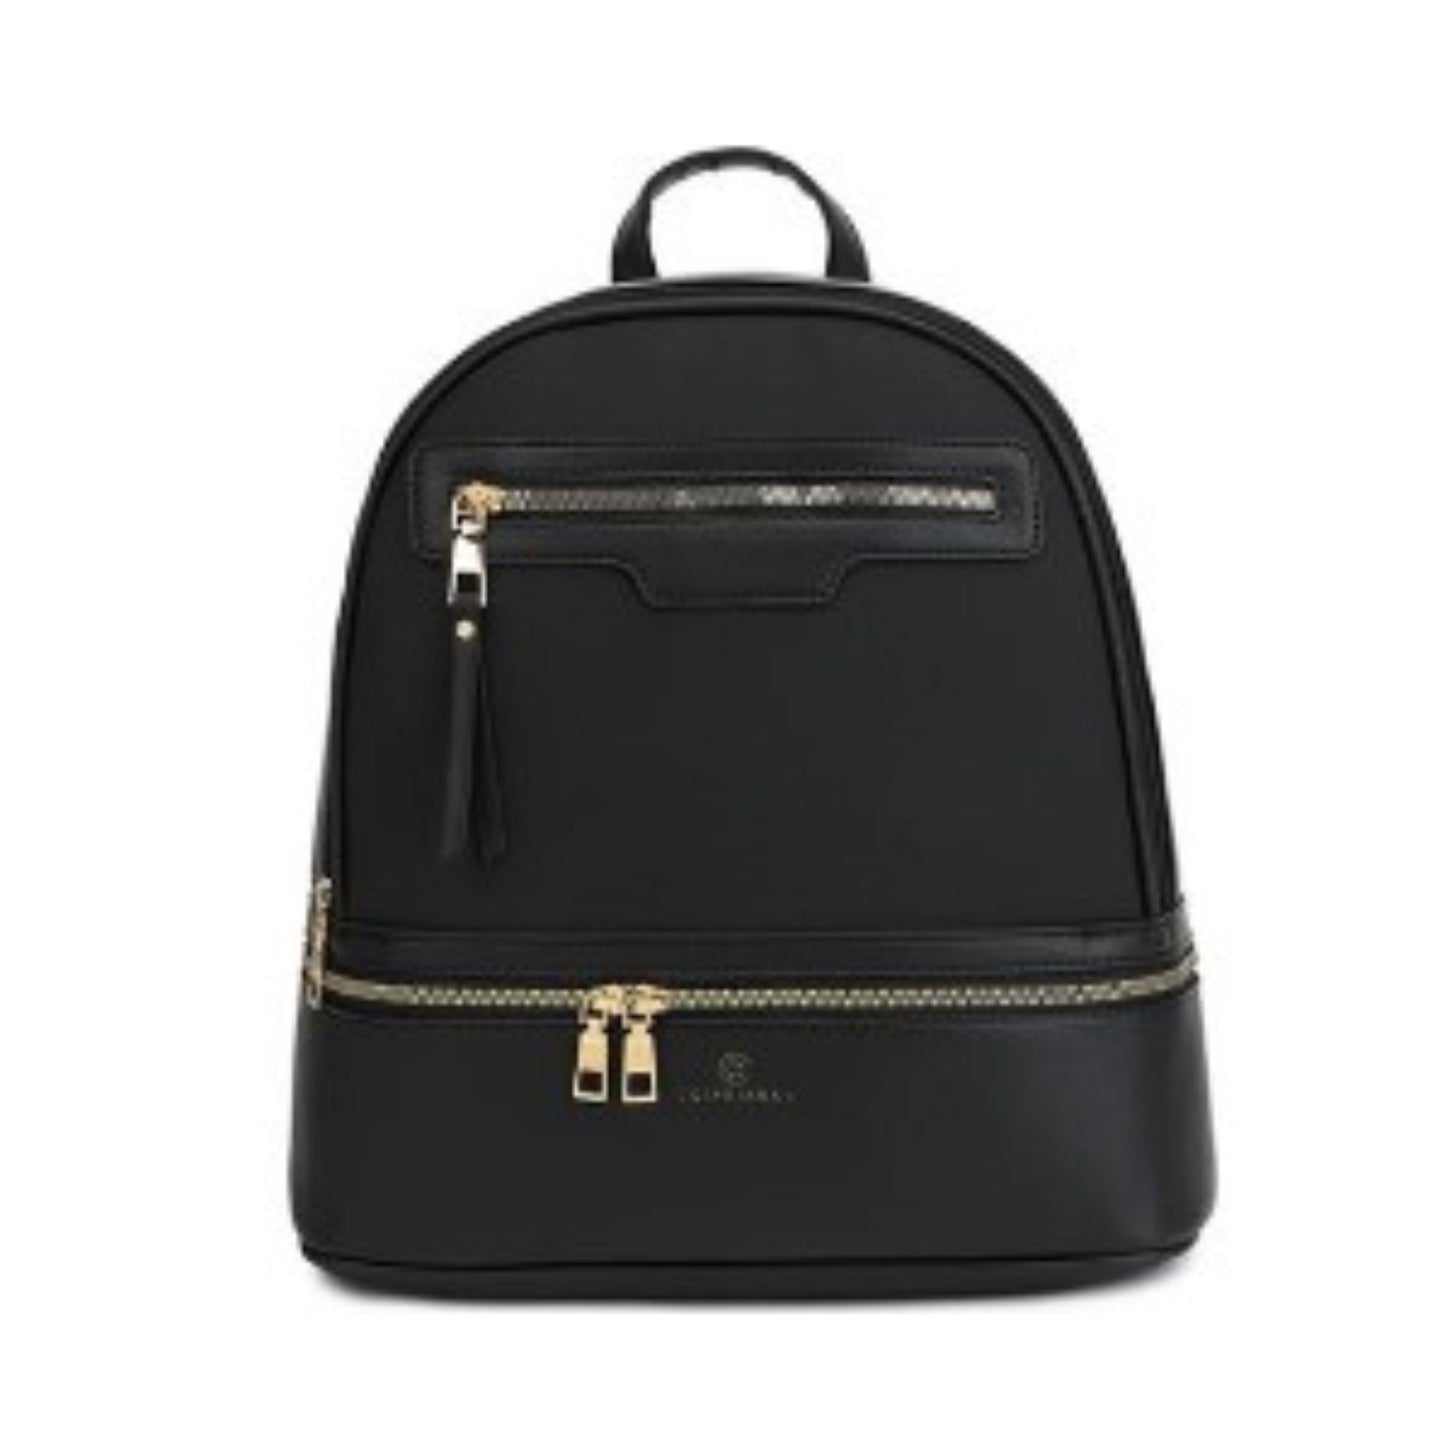 KS2299 Bosalina Fashion Backpack